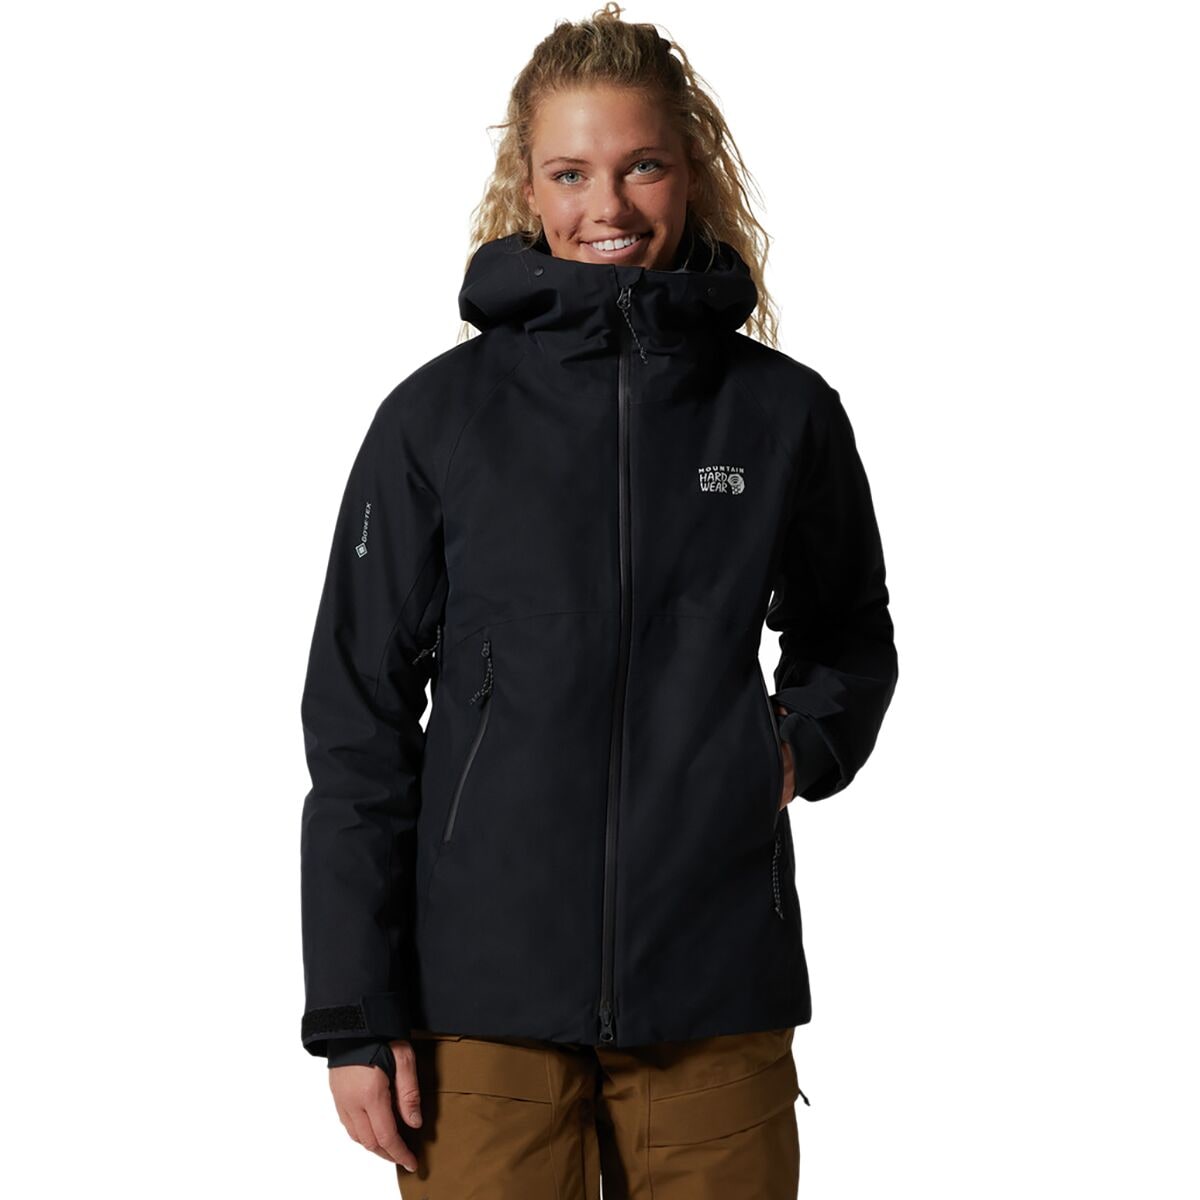 Mountain Hardwear Cloud Bank GORE-TEX LT Insulated Jacket - Women's